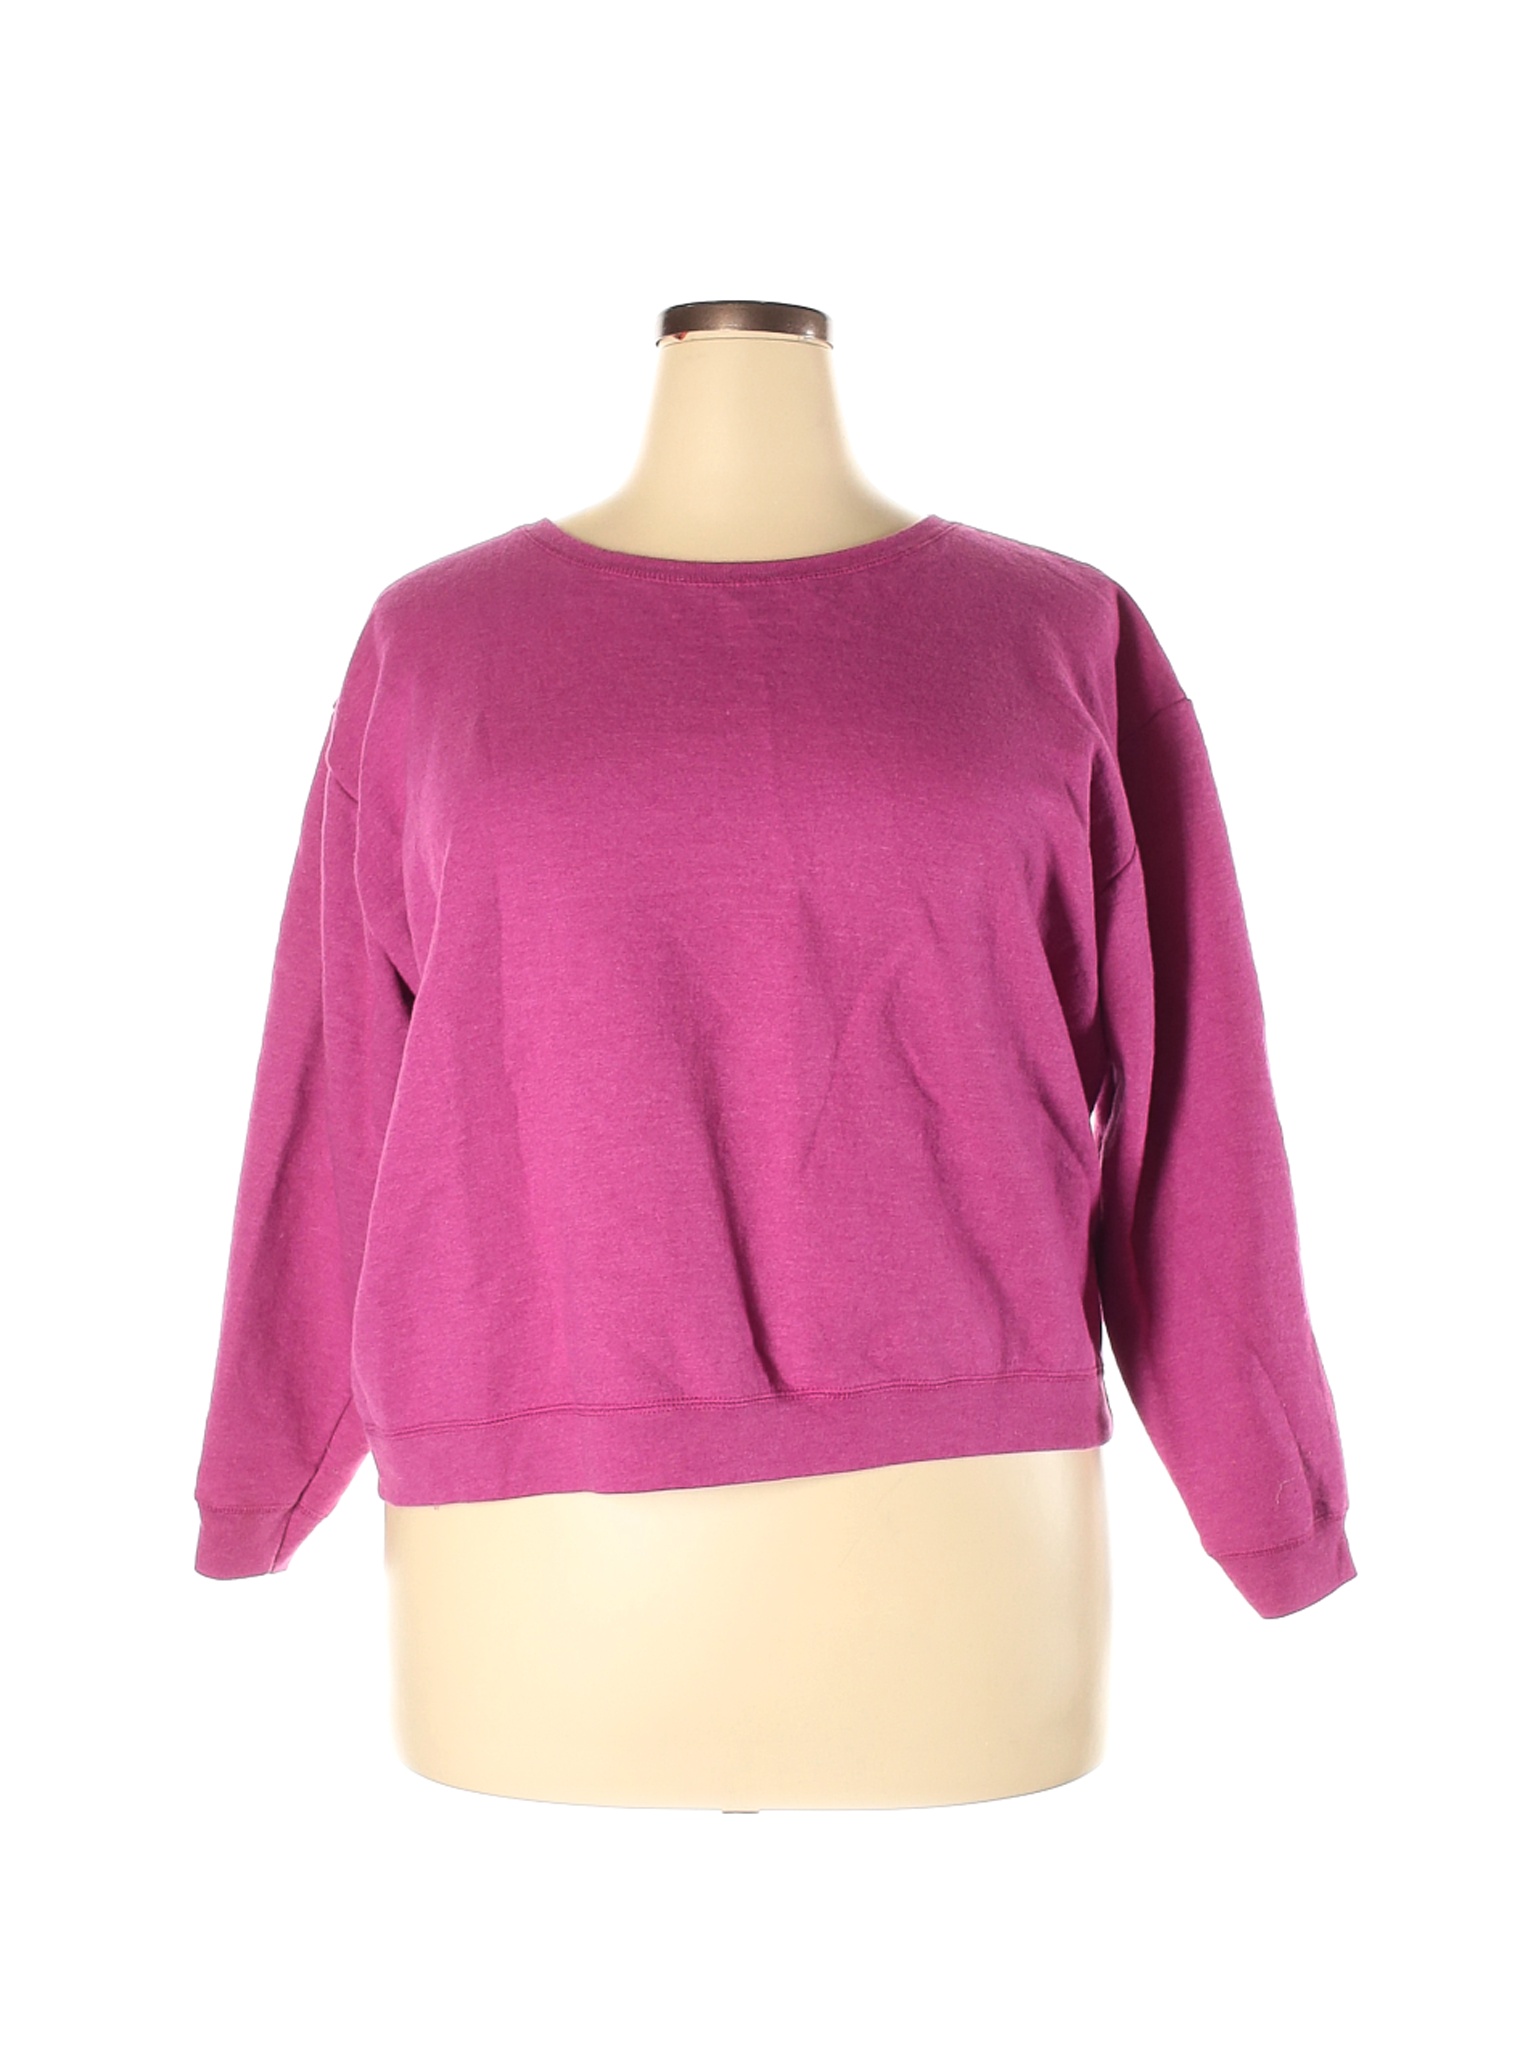 Hanes Women Pink Sweatshirt 2X Plus | eBay